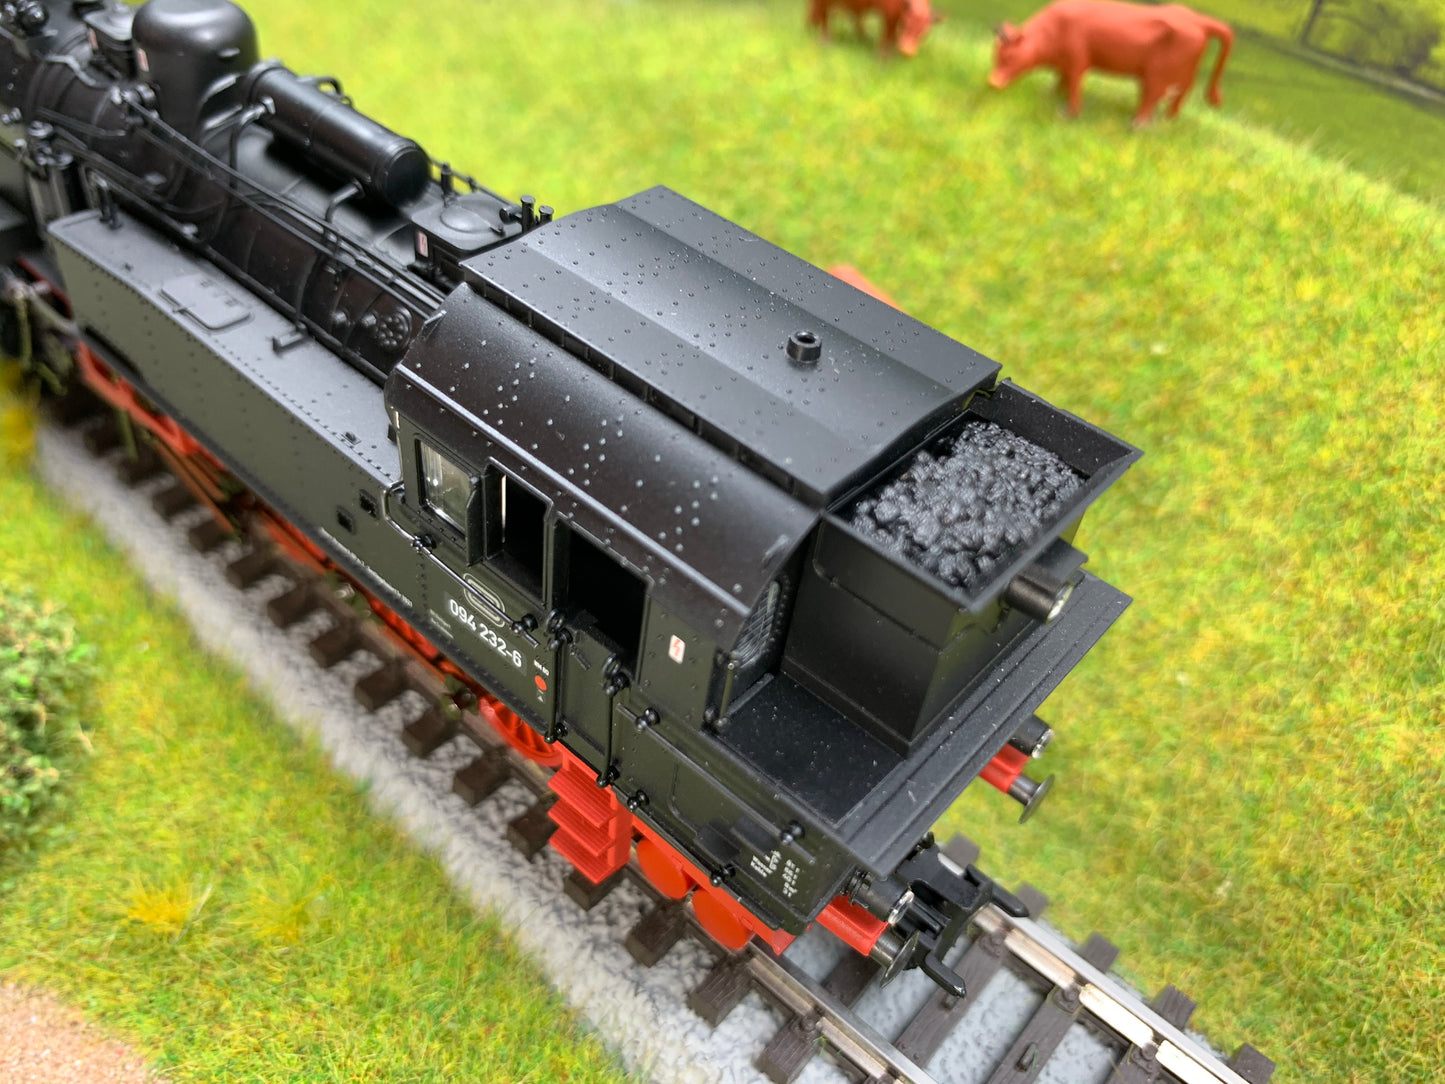 Marklin 37180 - Class 94 Steam Locomotive